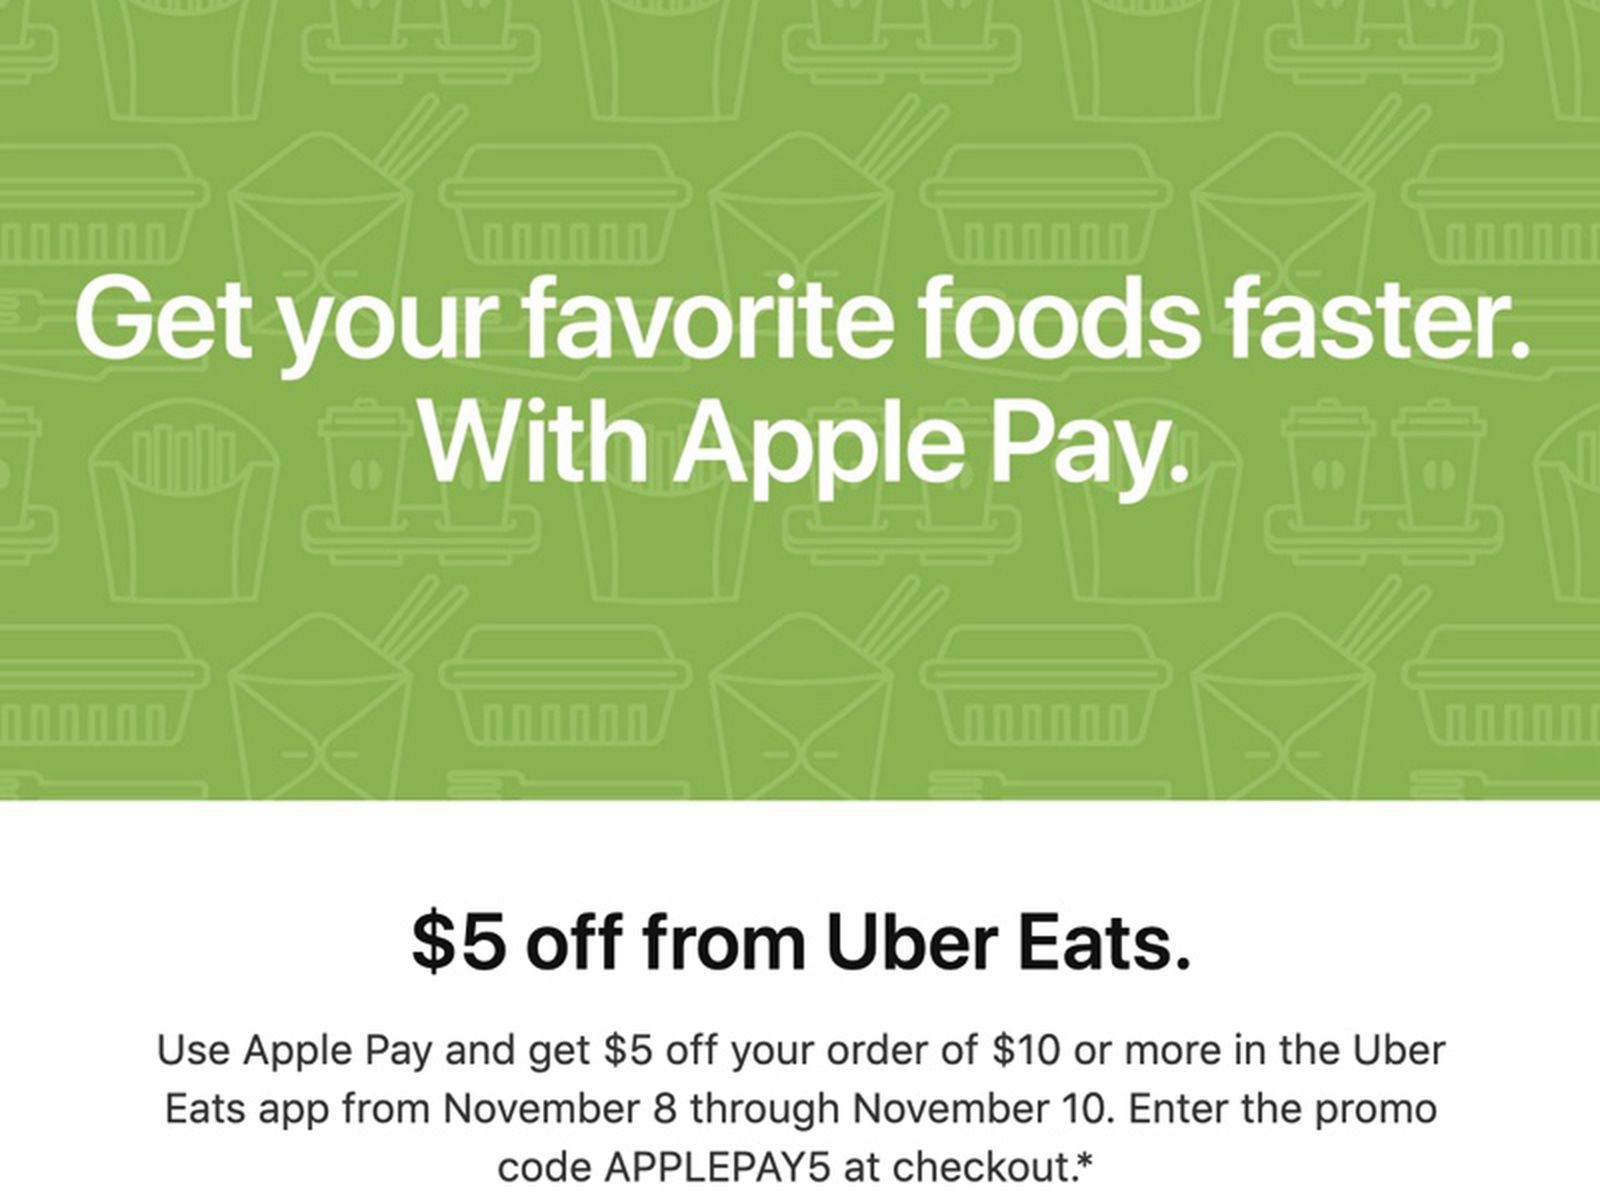 Apple Pay Promo Offers 5 Off Uber Eats Orders Macrumors